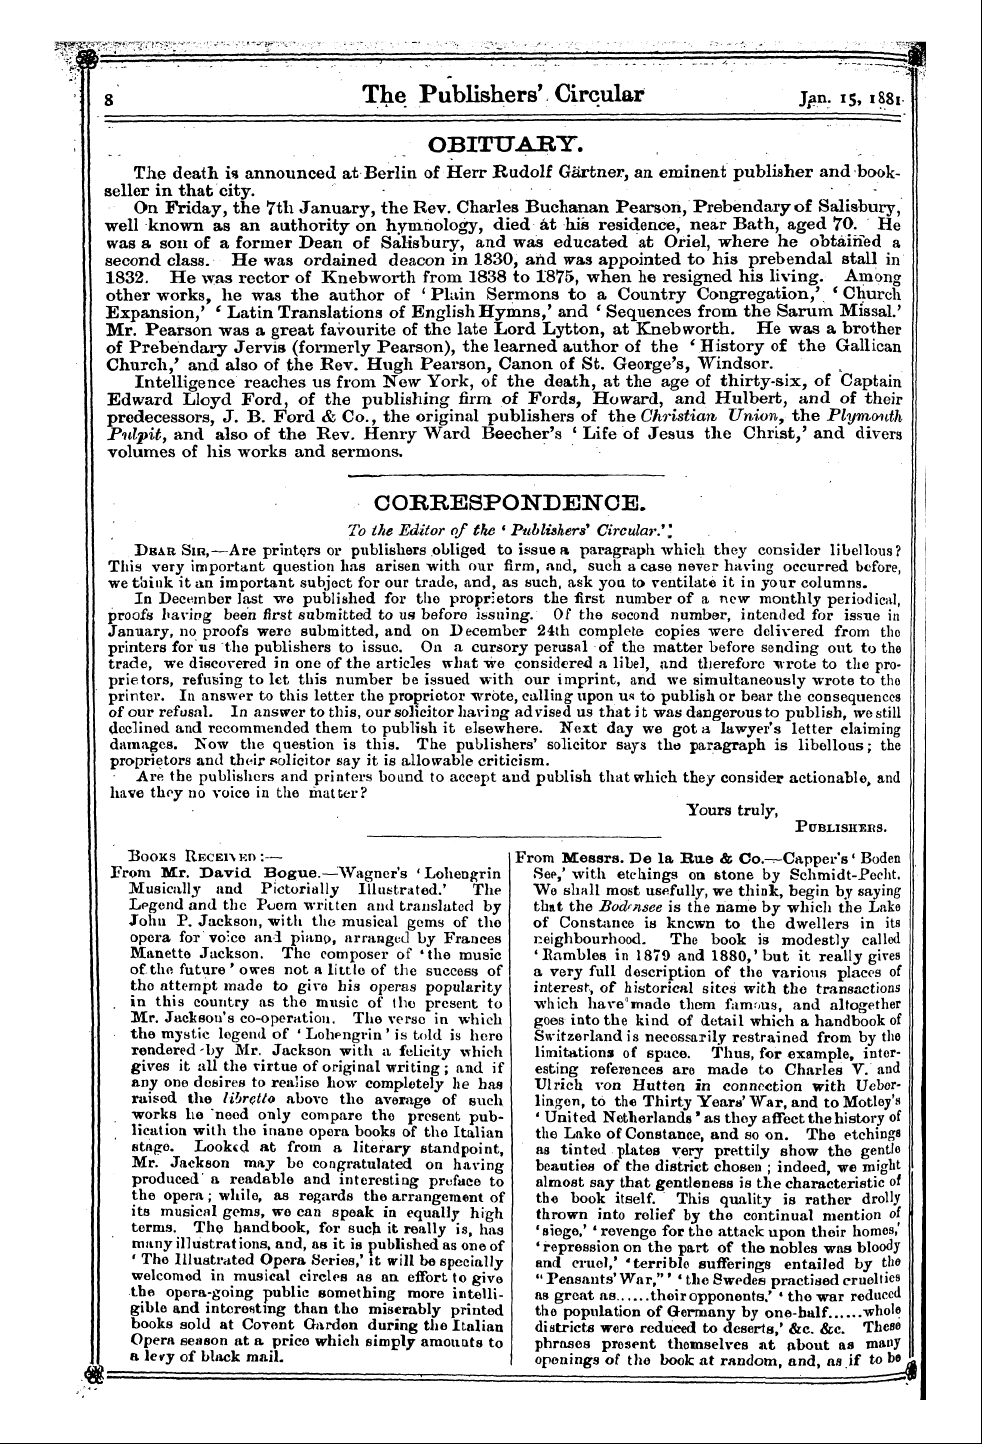 Publishers’ Circular (1880-1890): jS F Y, 1st edition: 8